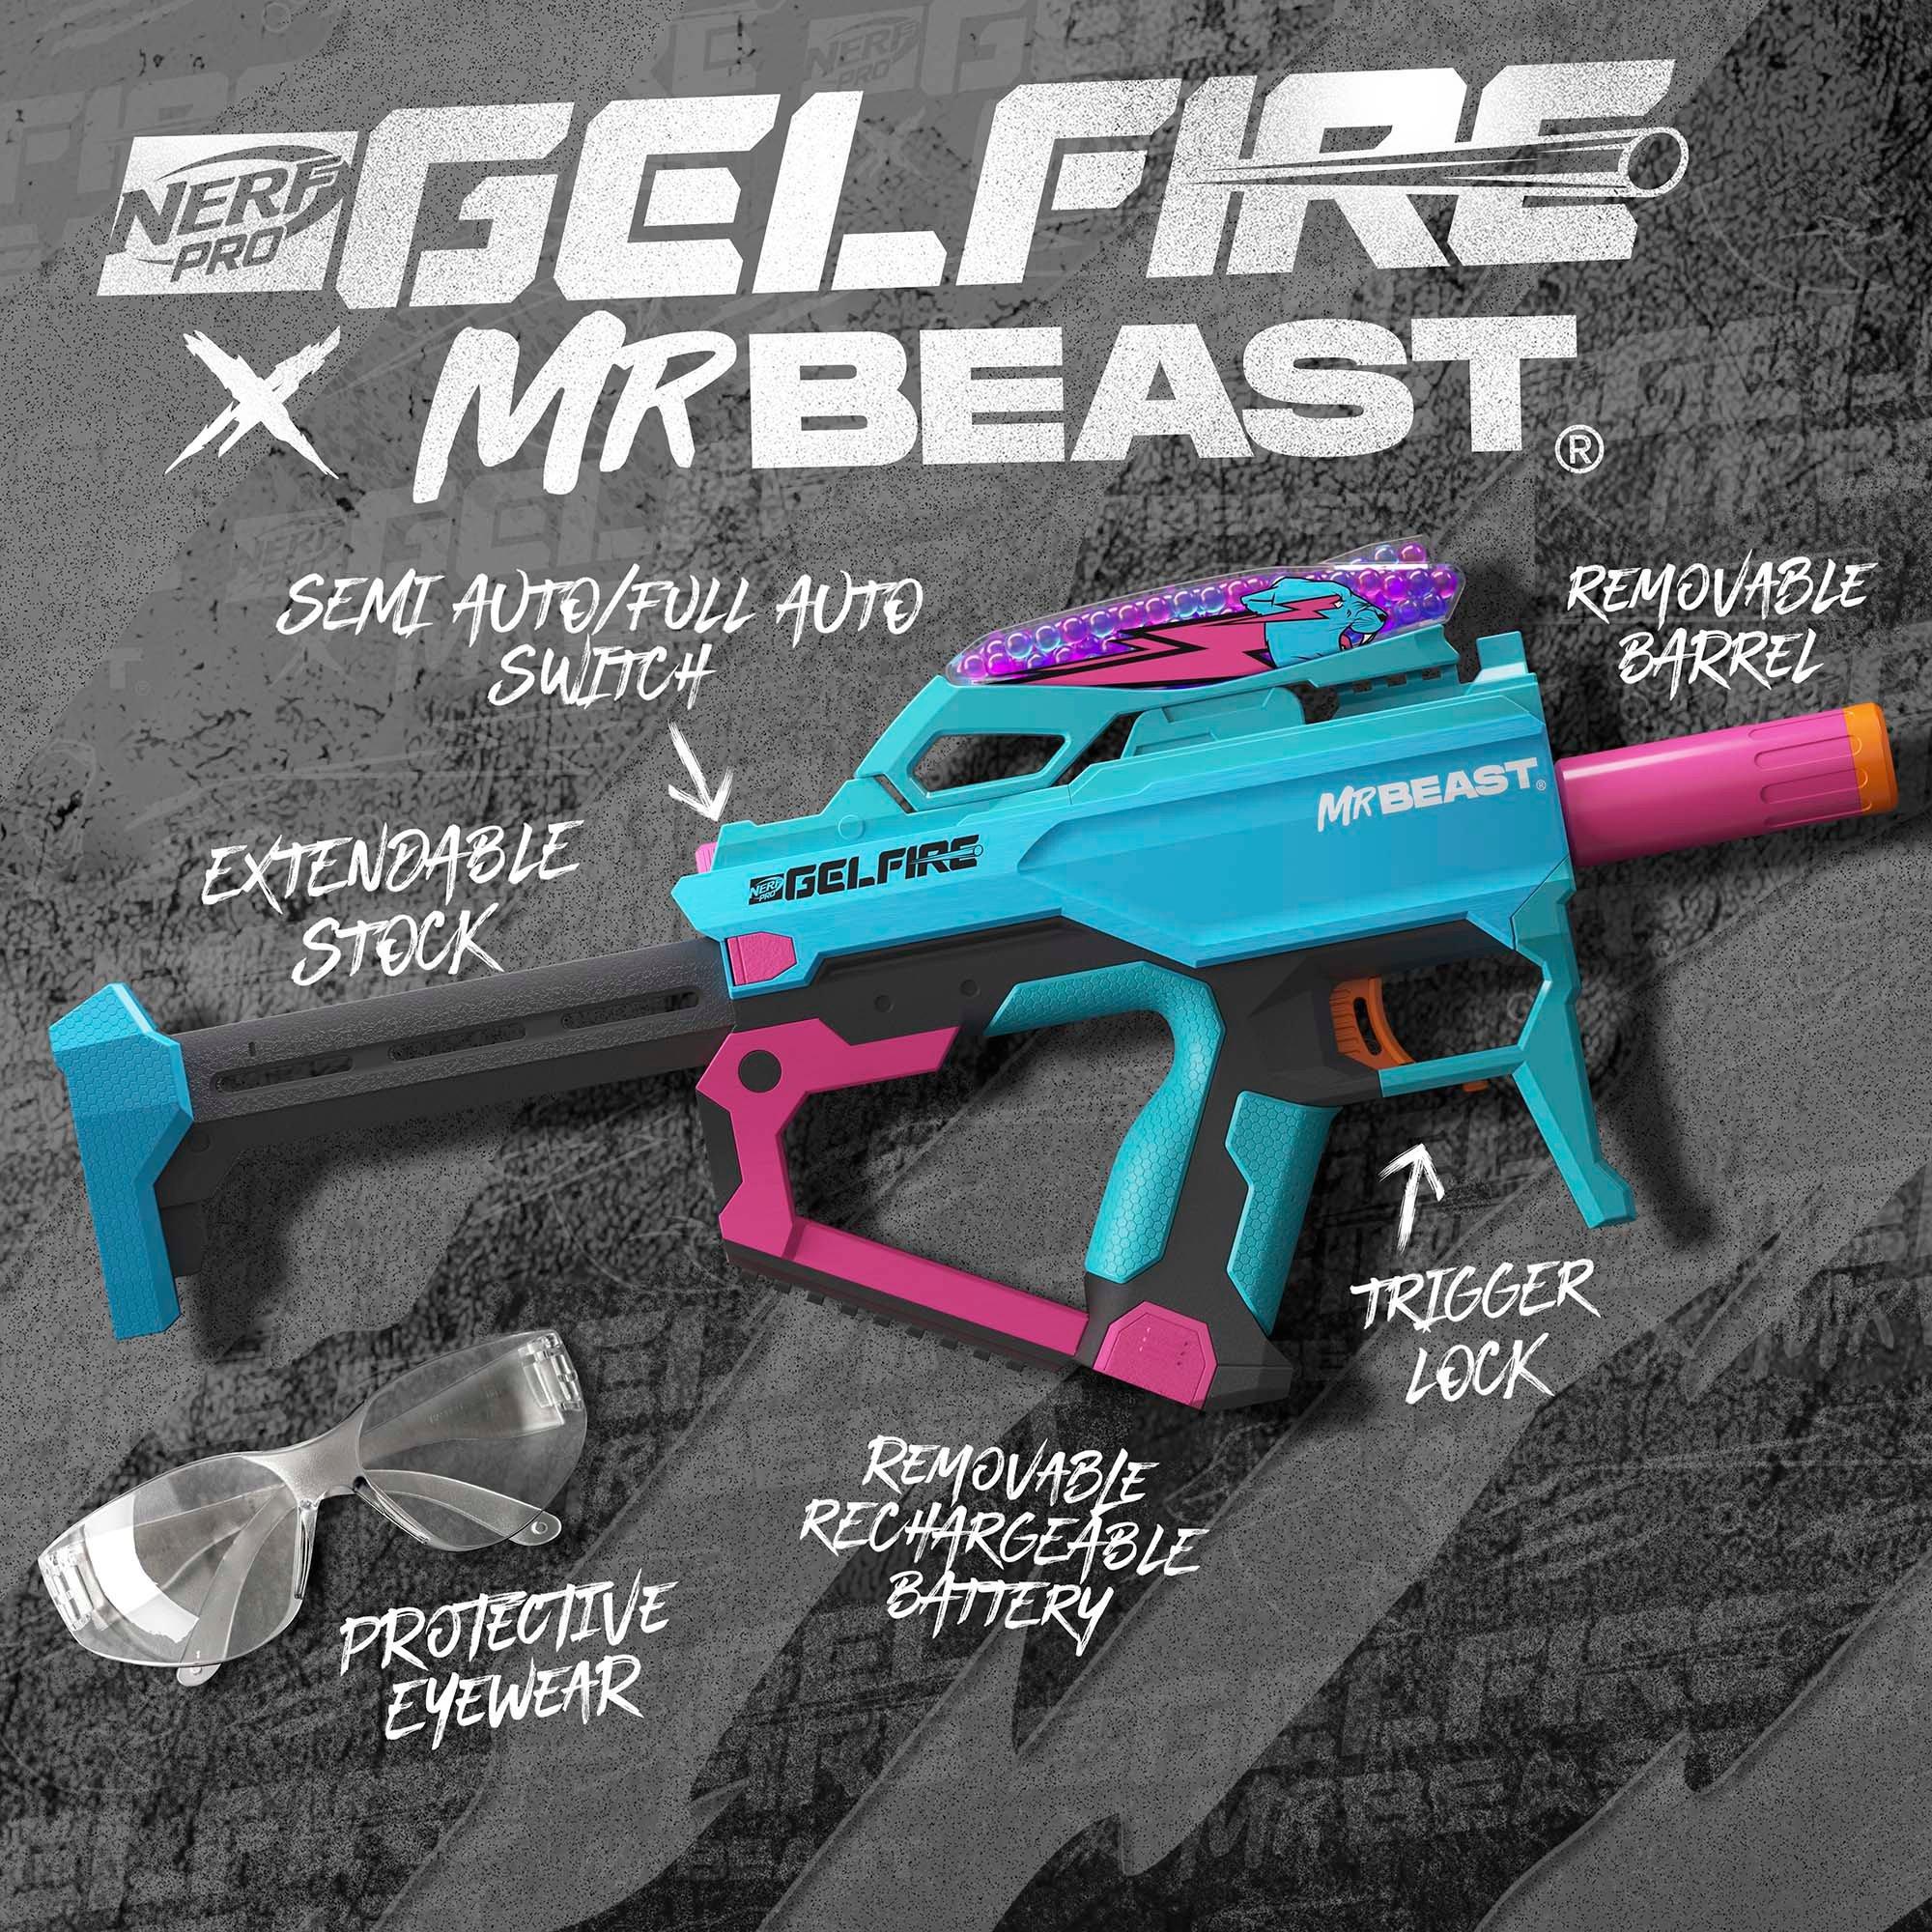 NERF Pro Gelfire X Mrbeast Fully Automatic Blaster |